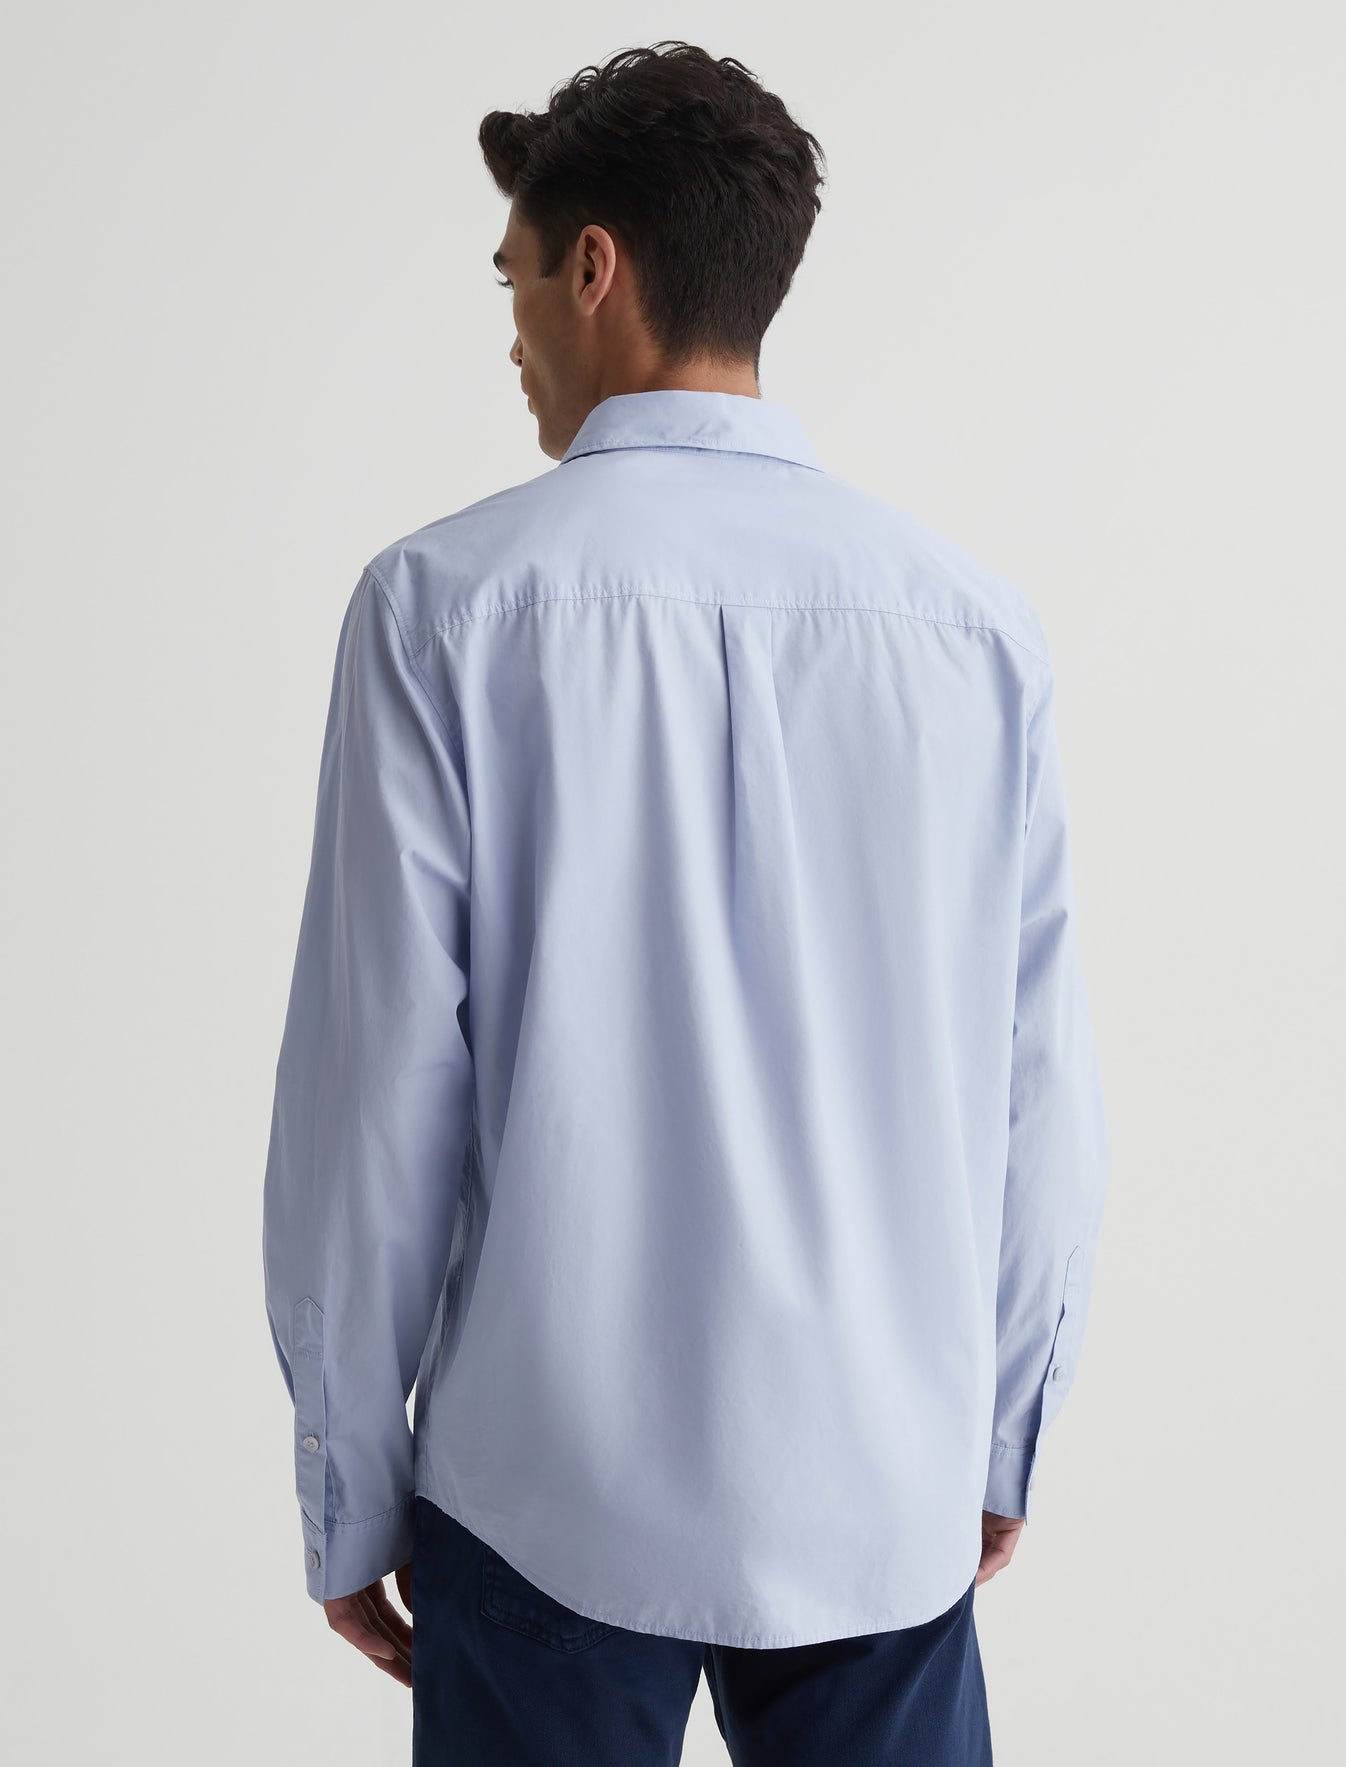 Aiden Shirt Blue Whisper Classic Long Sleeve Button-Up Shirt Men Top Photo 6